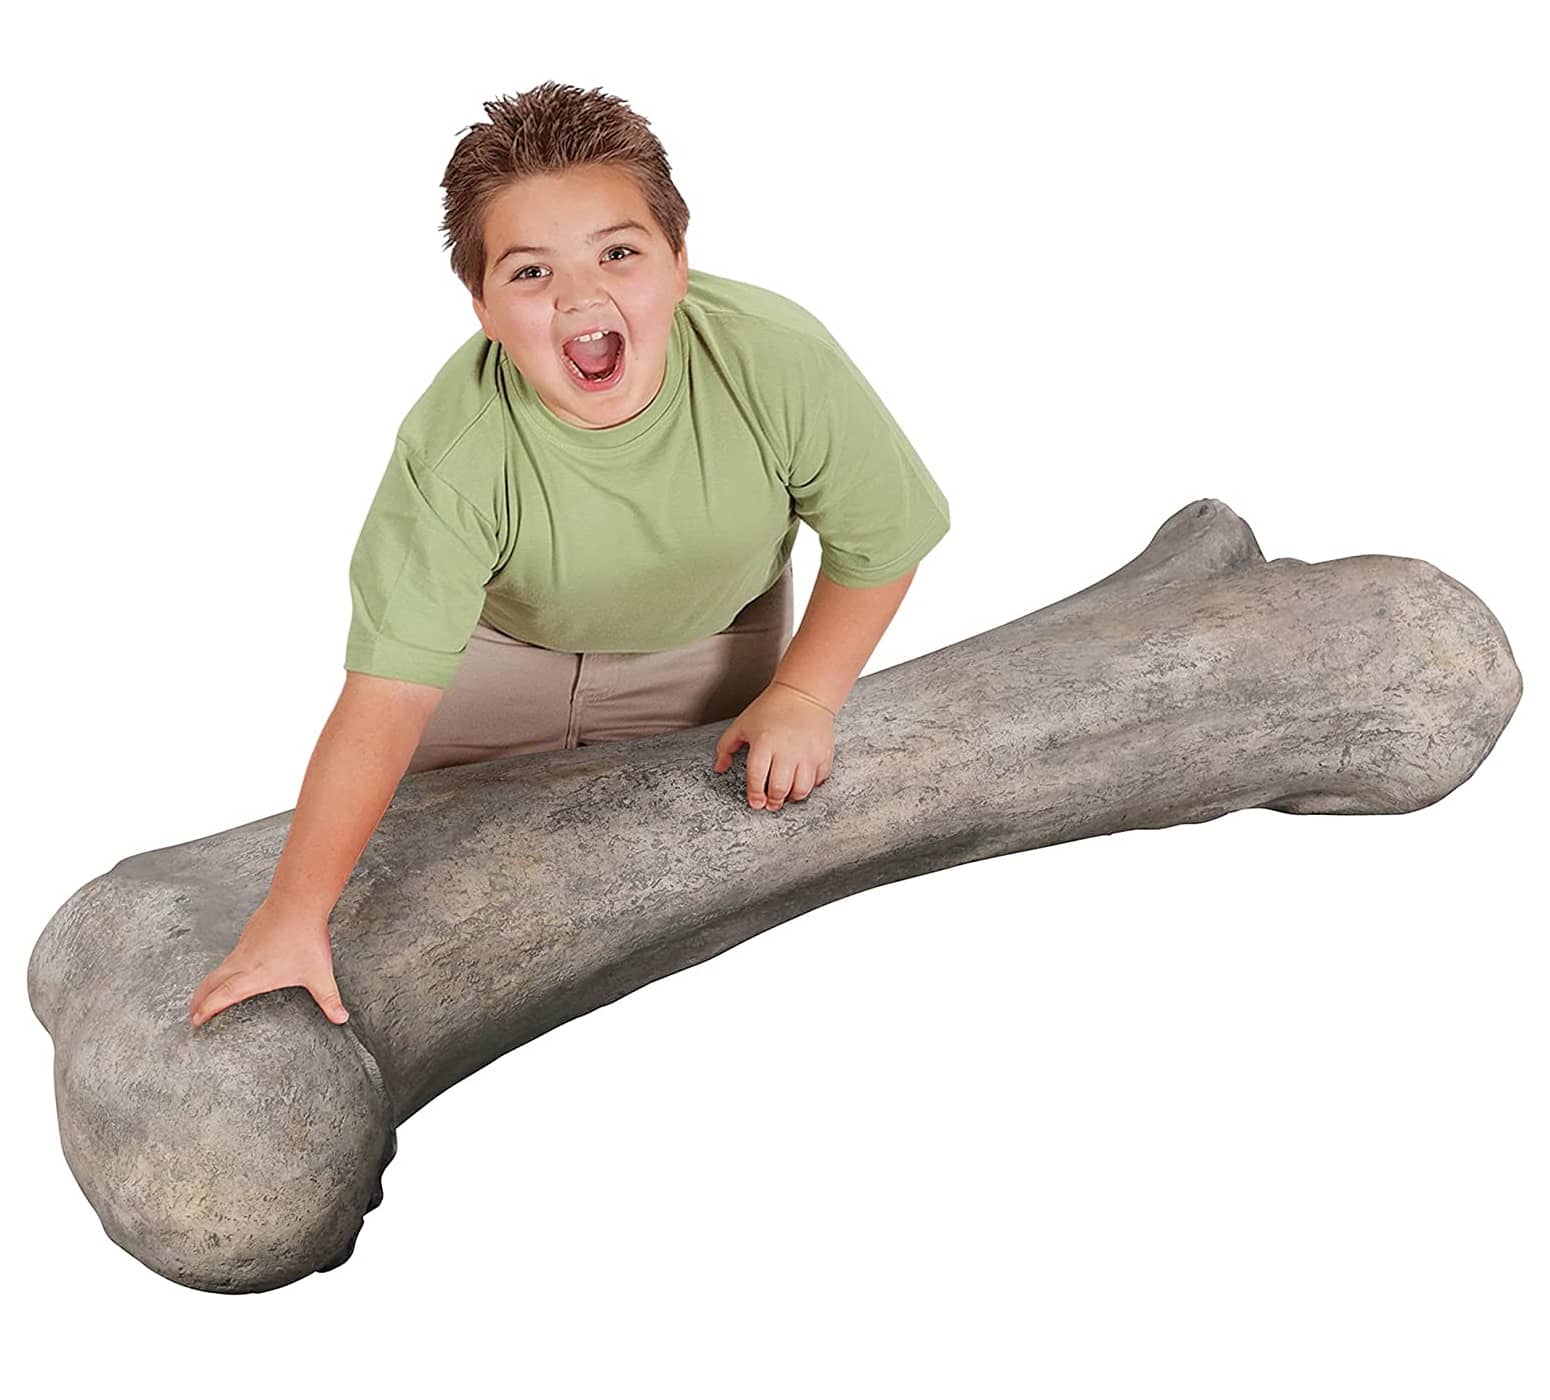 Gigantic Apatosaurus Dinosaur Femur Bone Fossil Statue